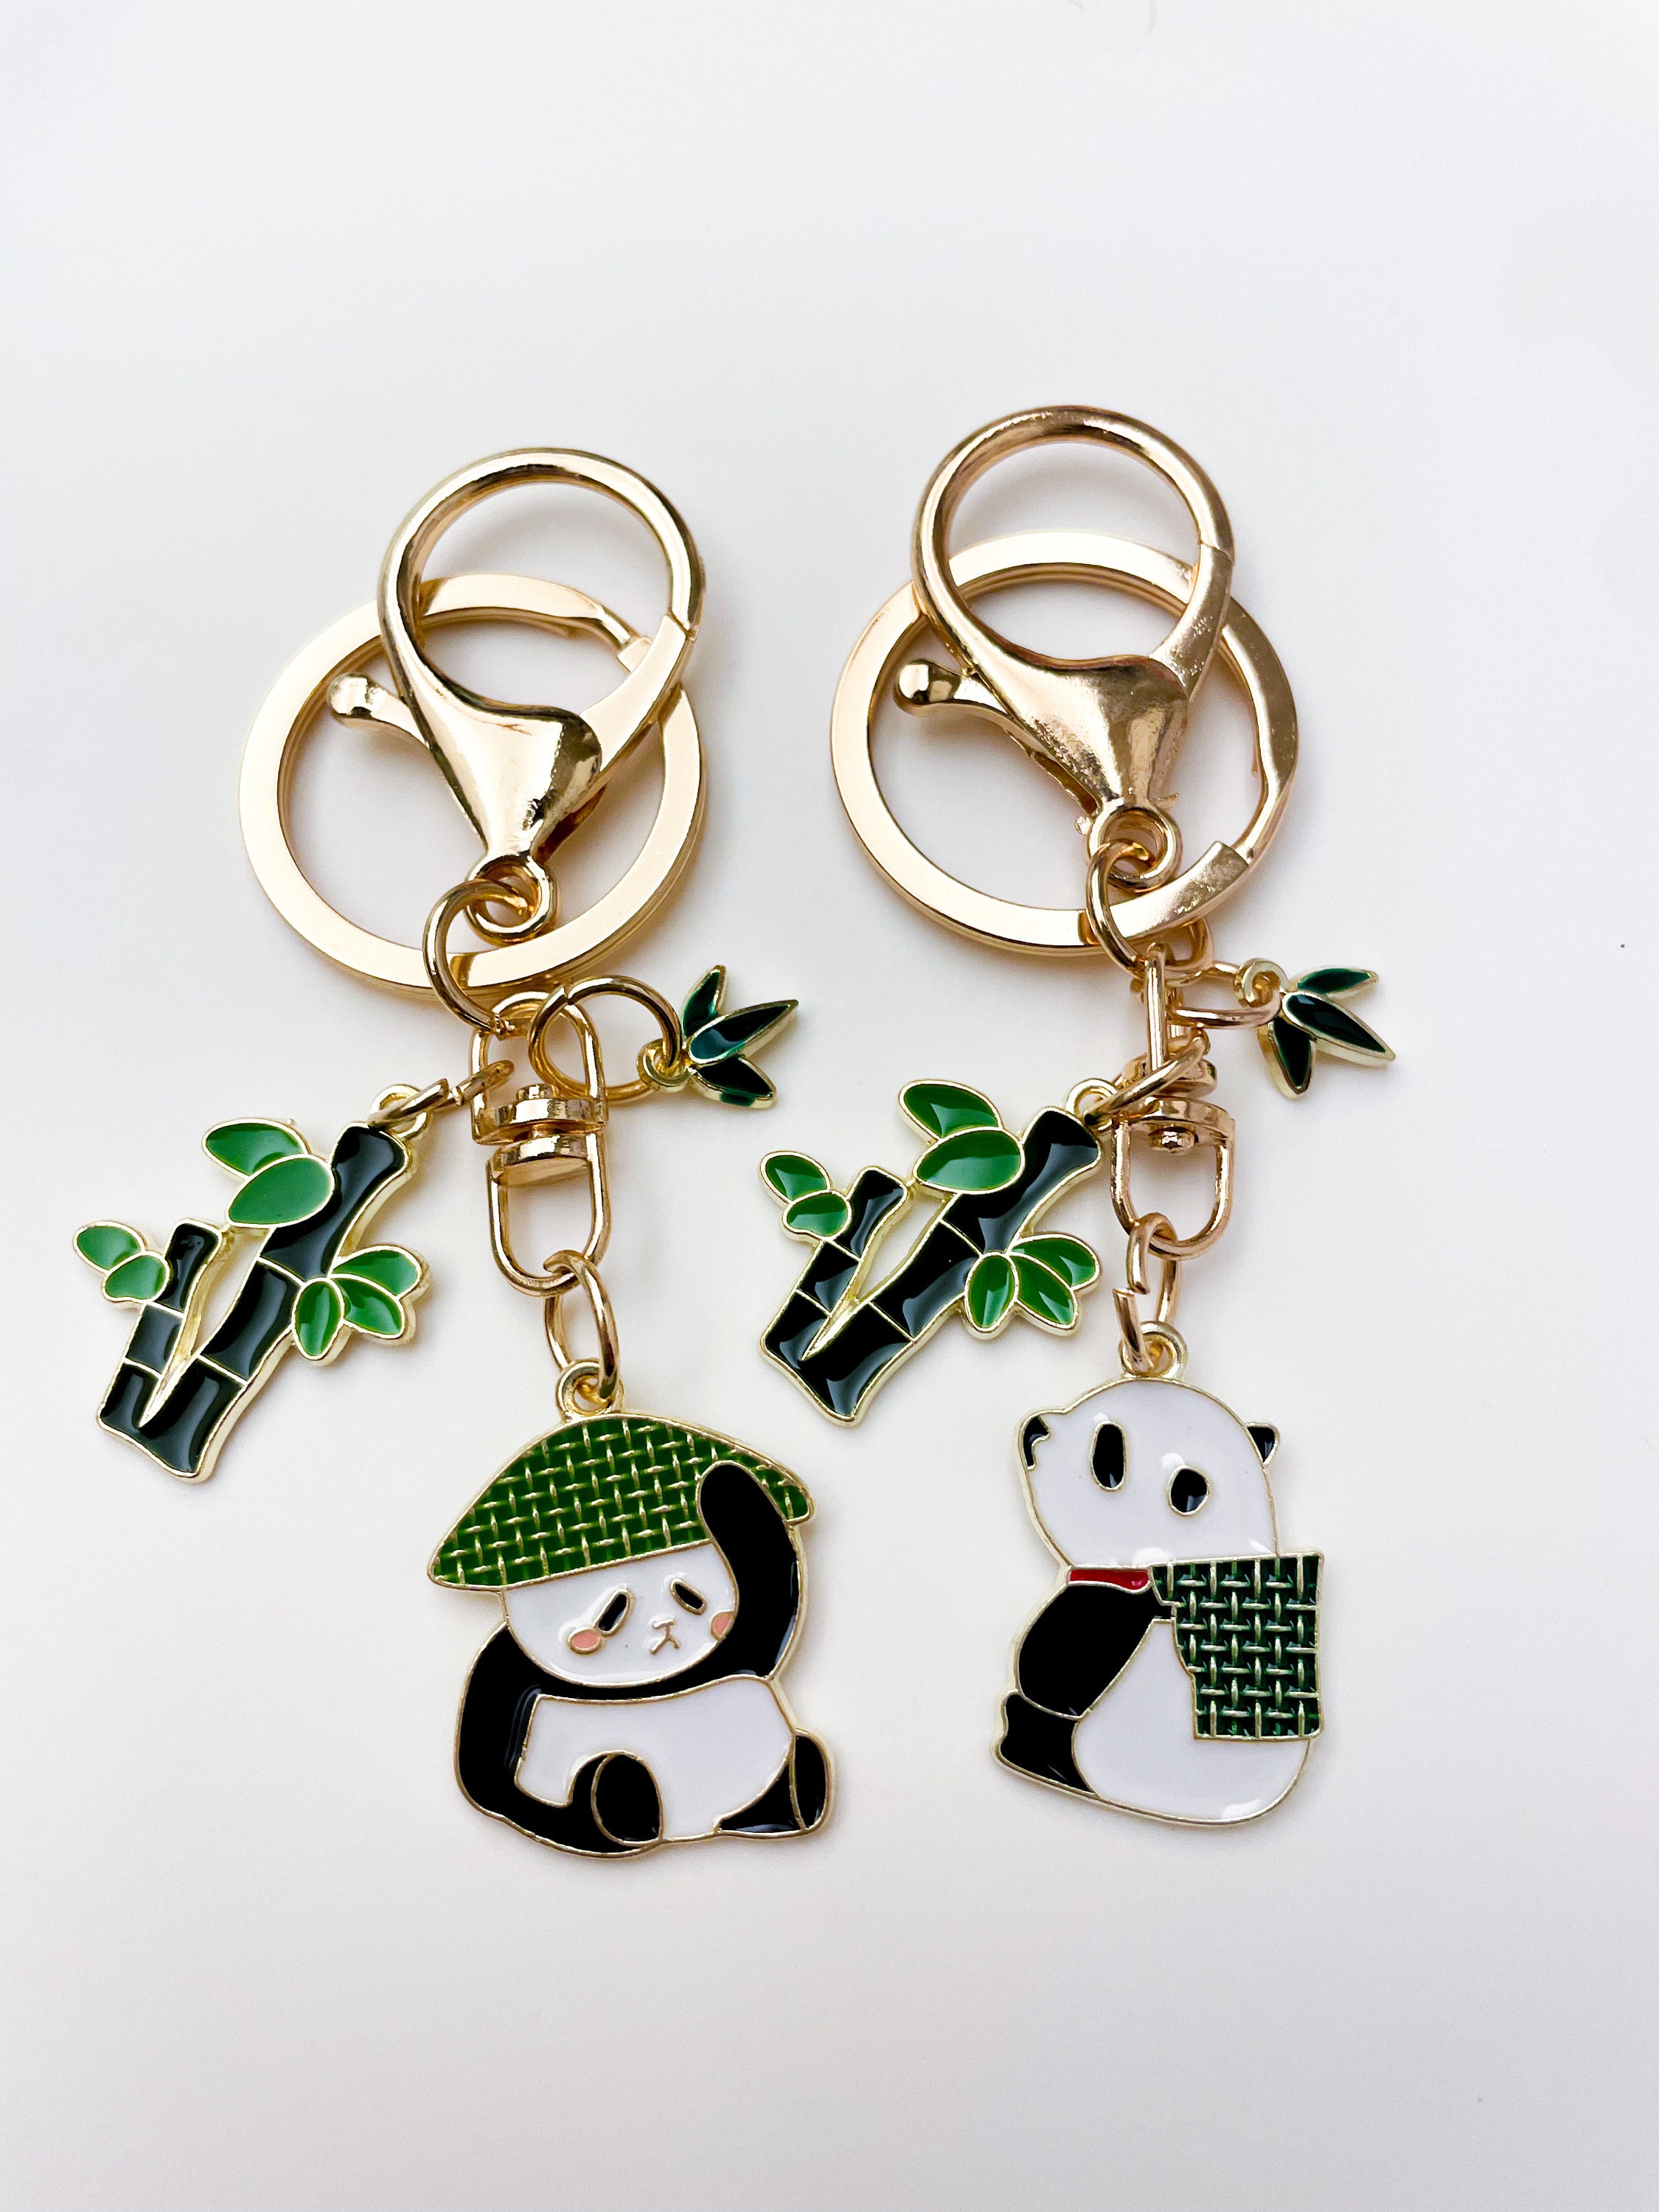 Veemoon 8pcs Panda Keychain Cute Key Chain Charm Keychain Backpack  Keychains Cartoon Animal Keychain Handbag Panda Decorations Key Ring  Backpack